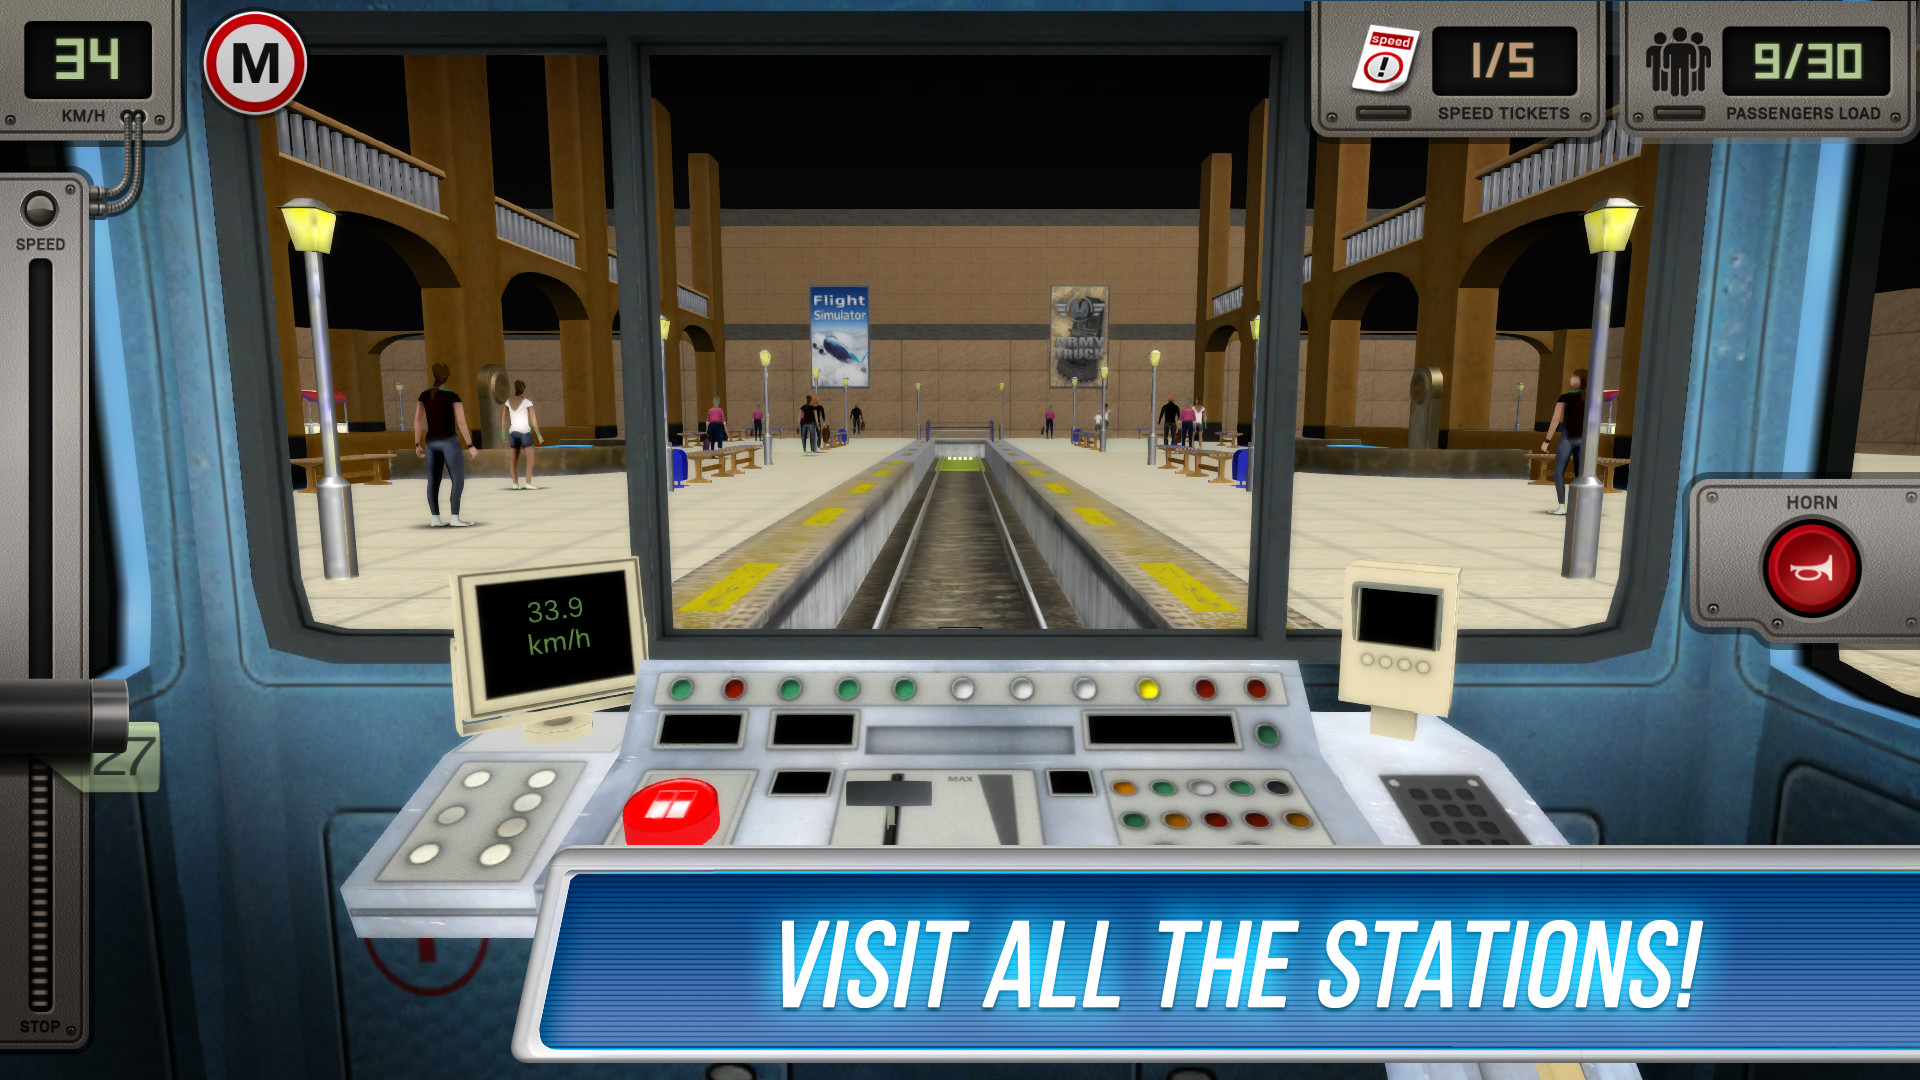 Сабвей симулятор 3д метро. Симулятор метро ps4. Русич Subway Simulator 3d. Метро симулятор 3д - поезда. Симулятор метро 3d игры